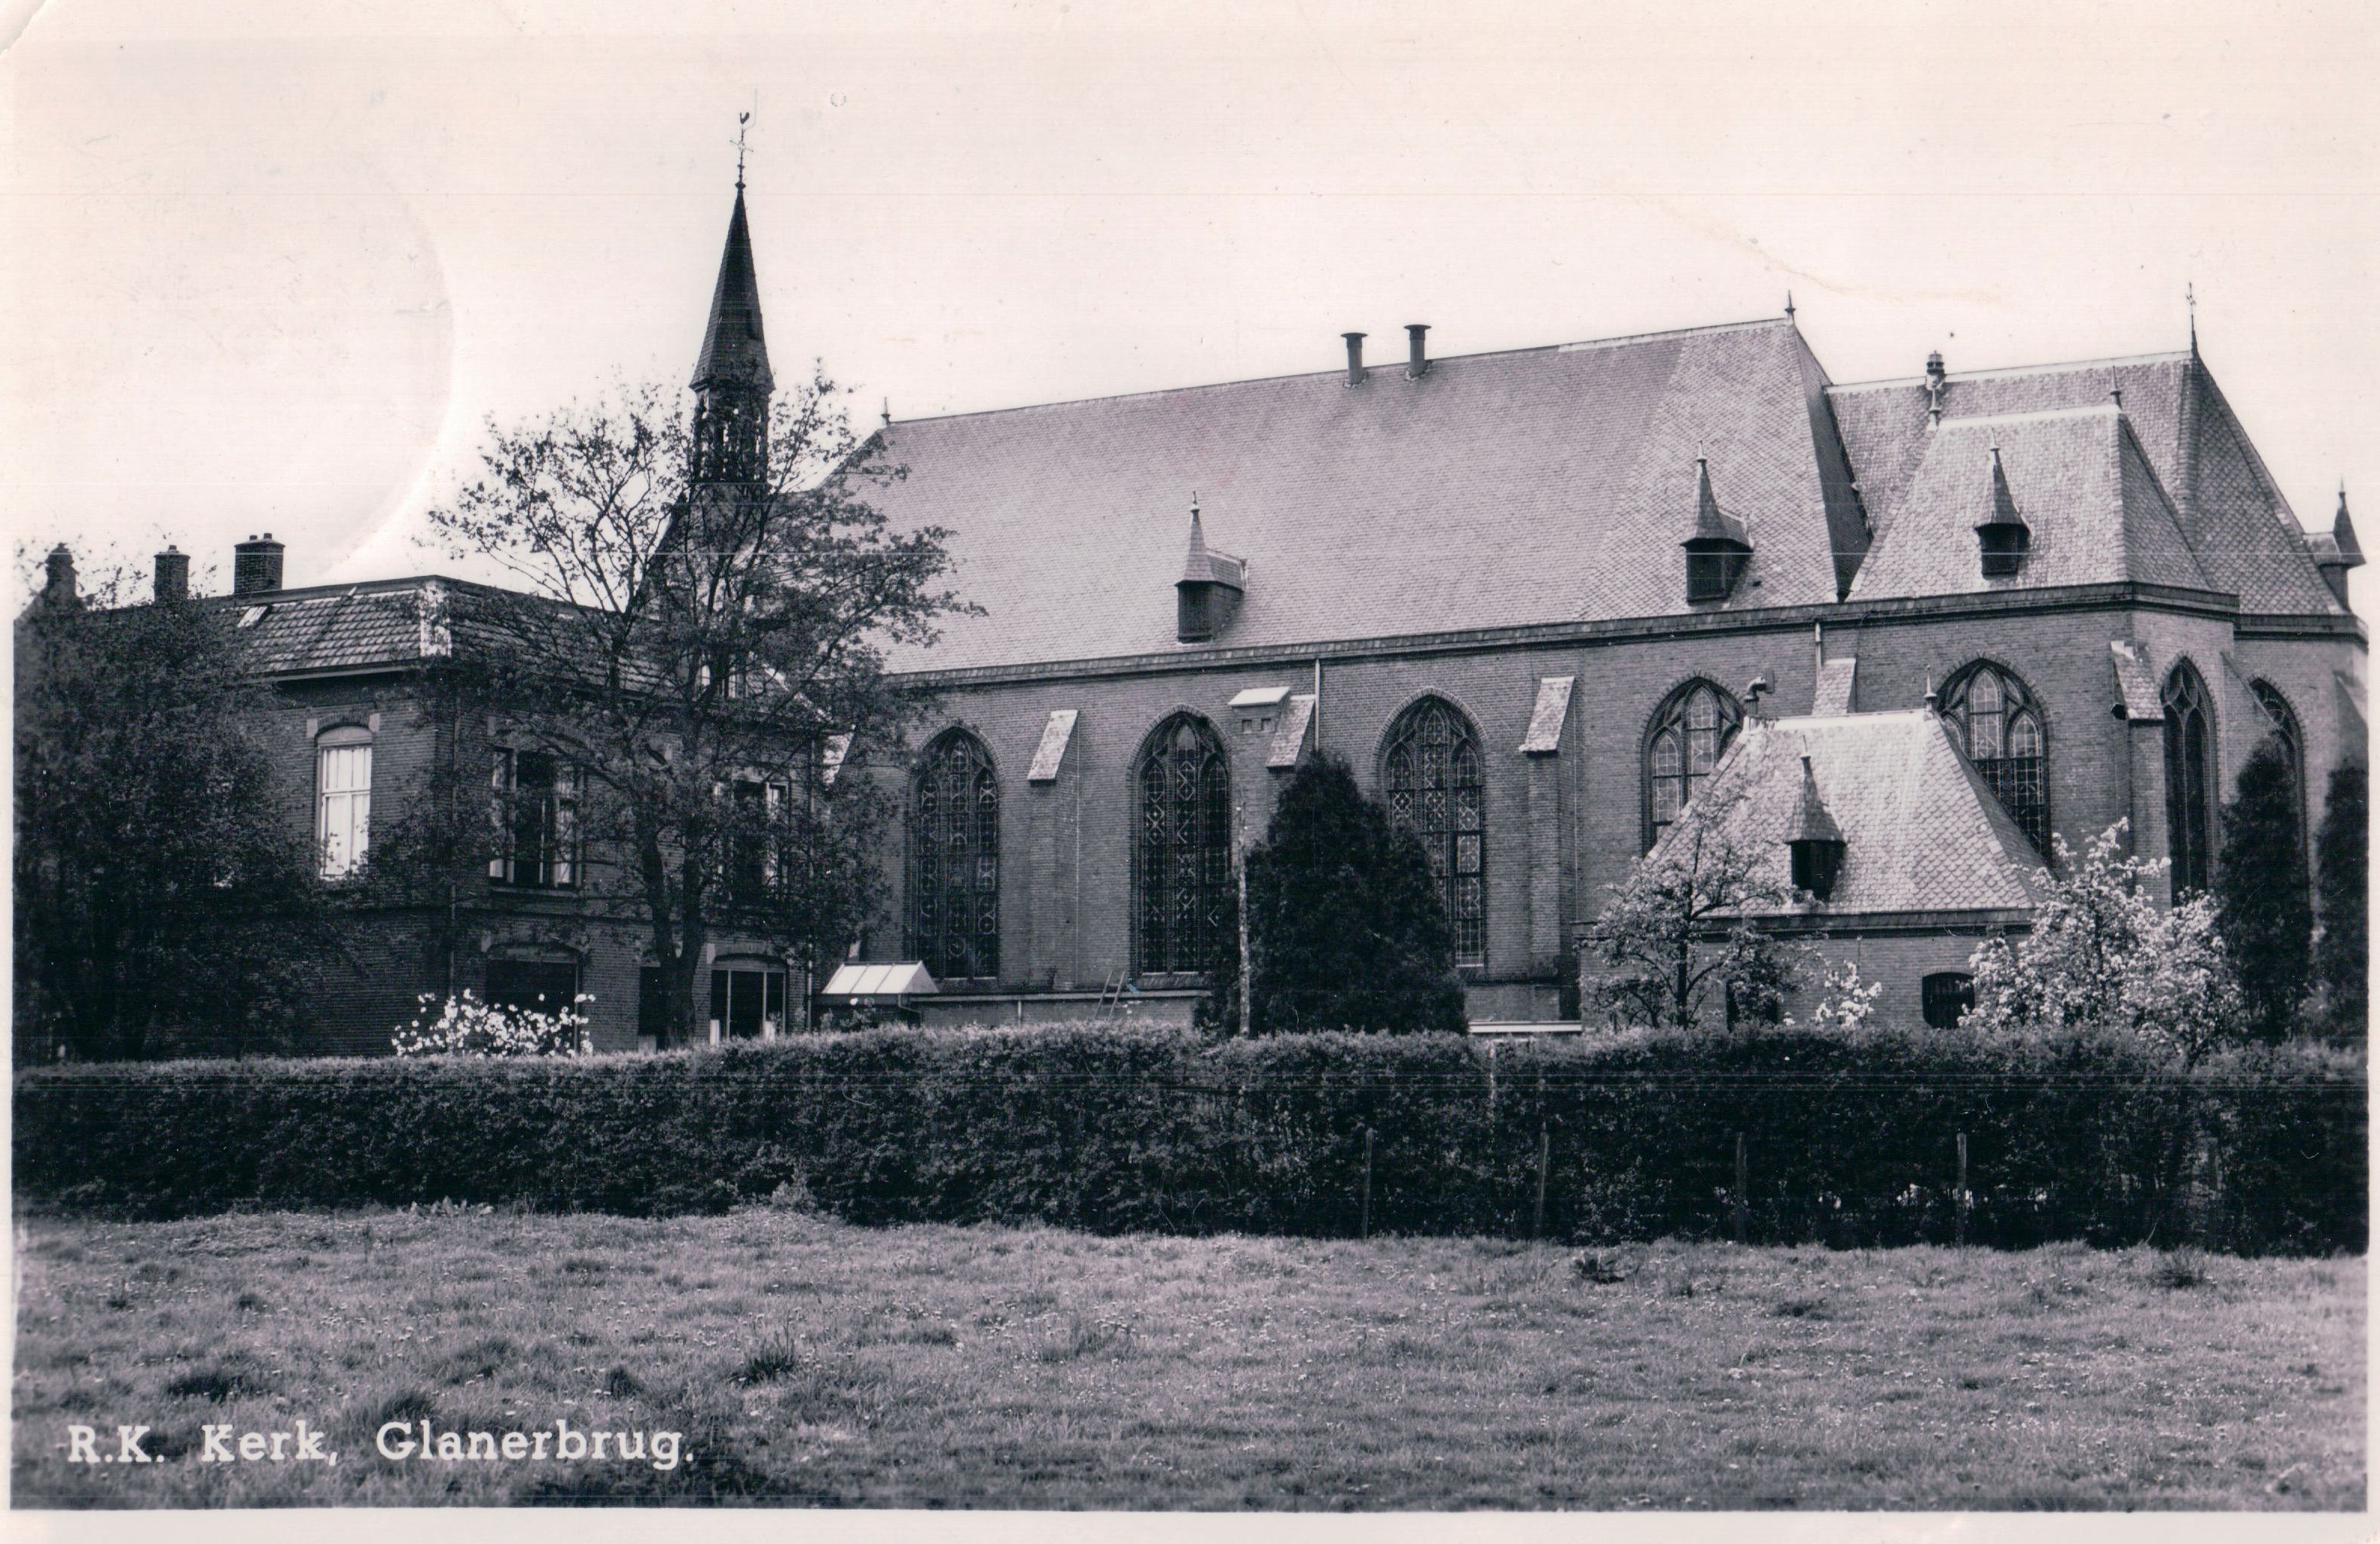 Glanerbrug-rk-kerk-1953-2a59ef42.jpg